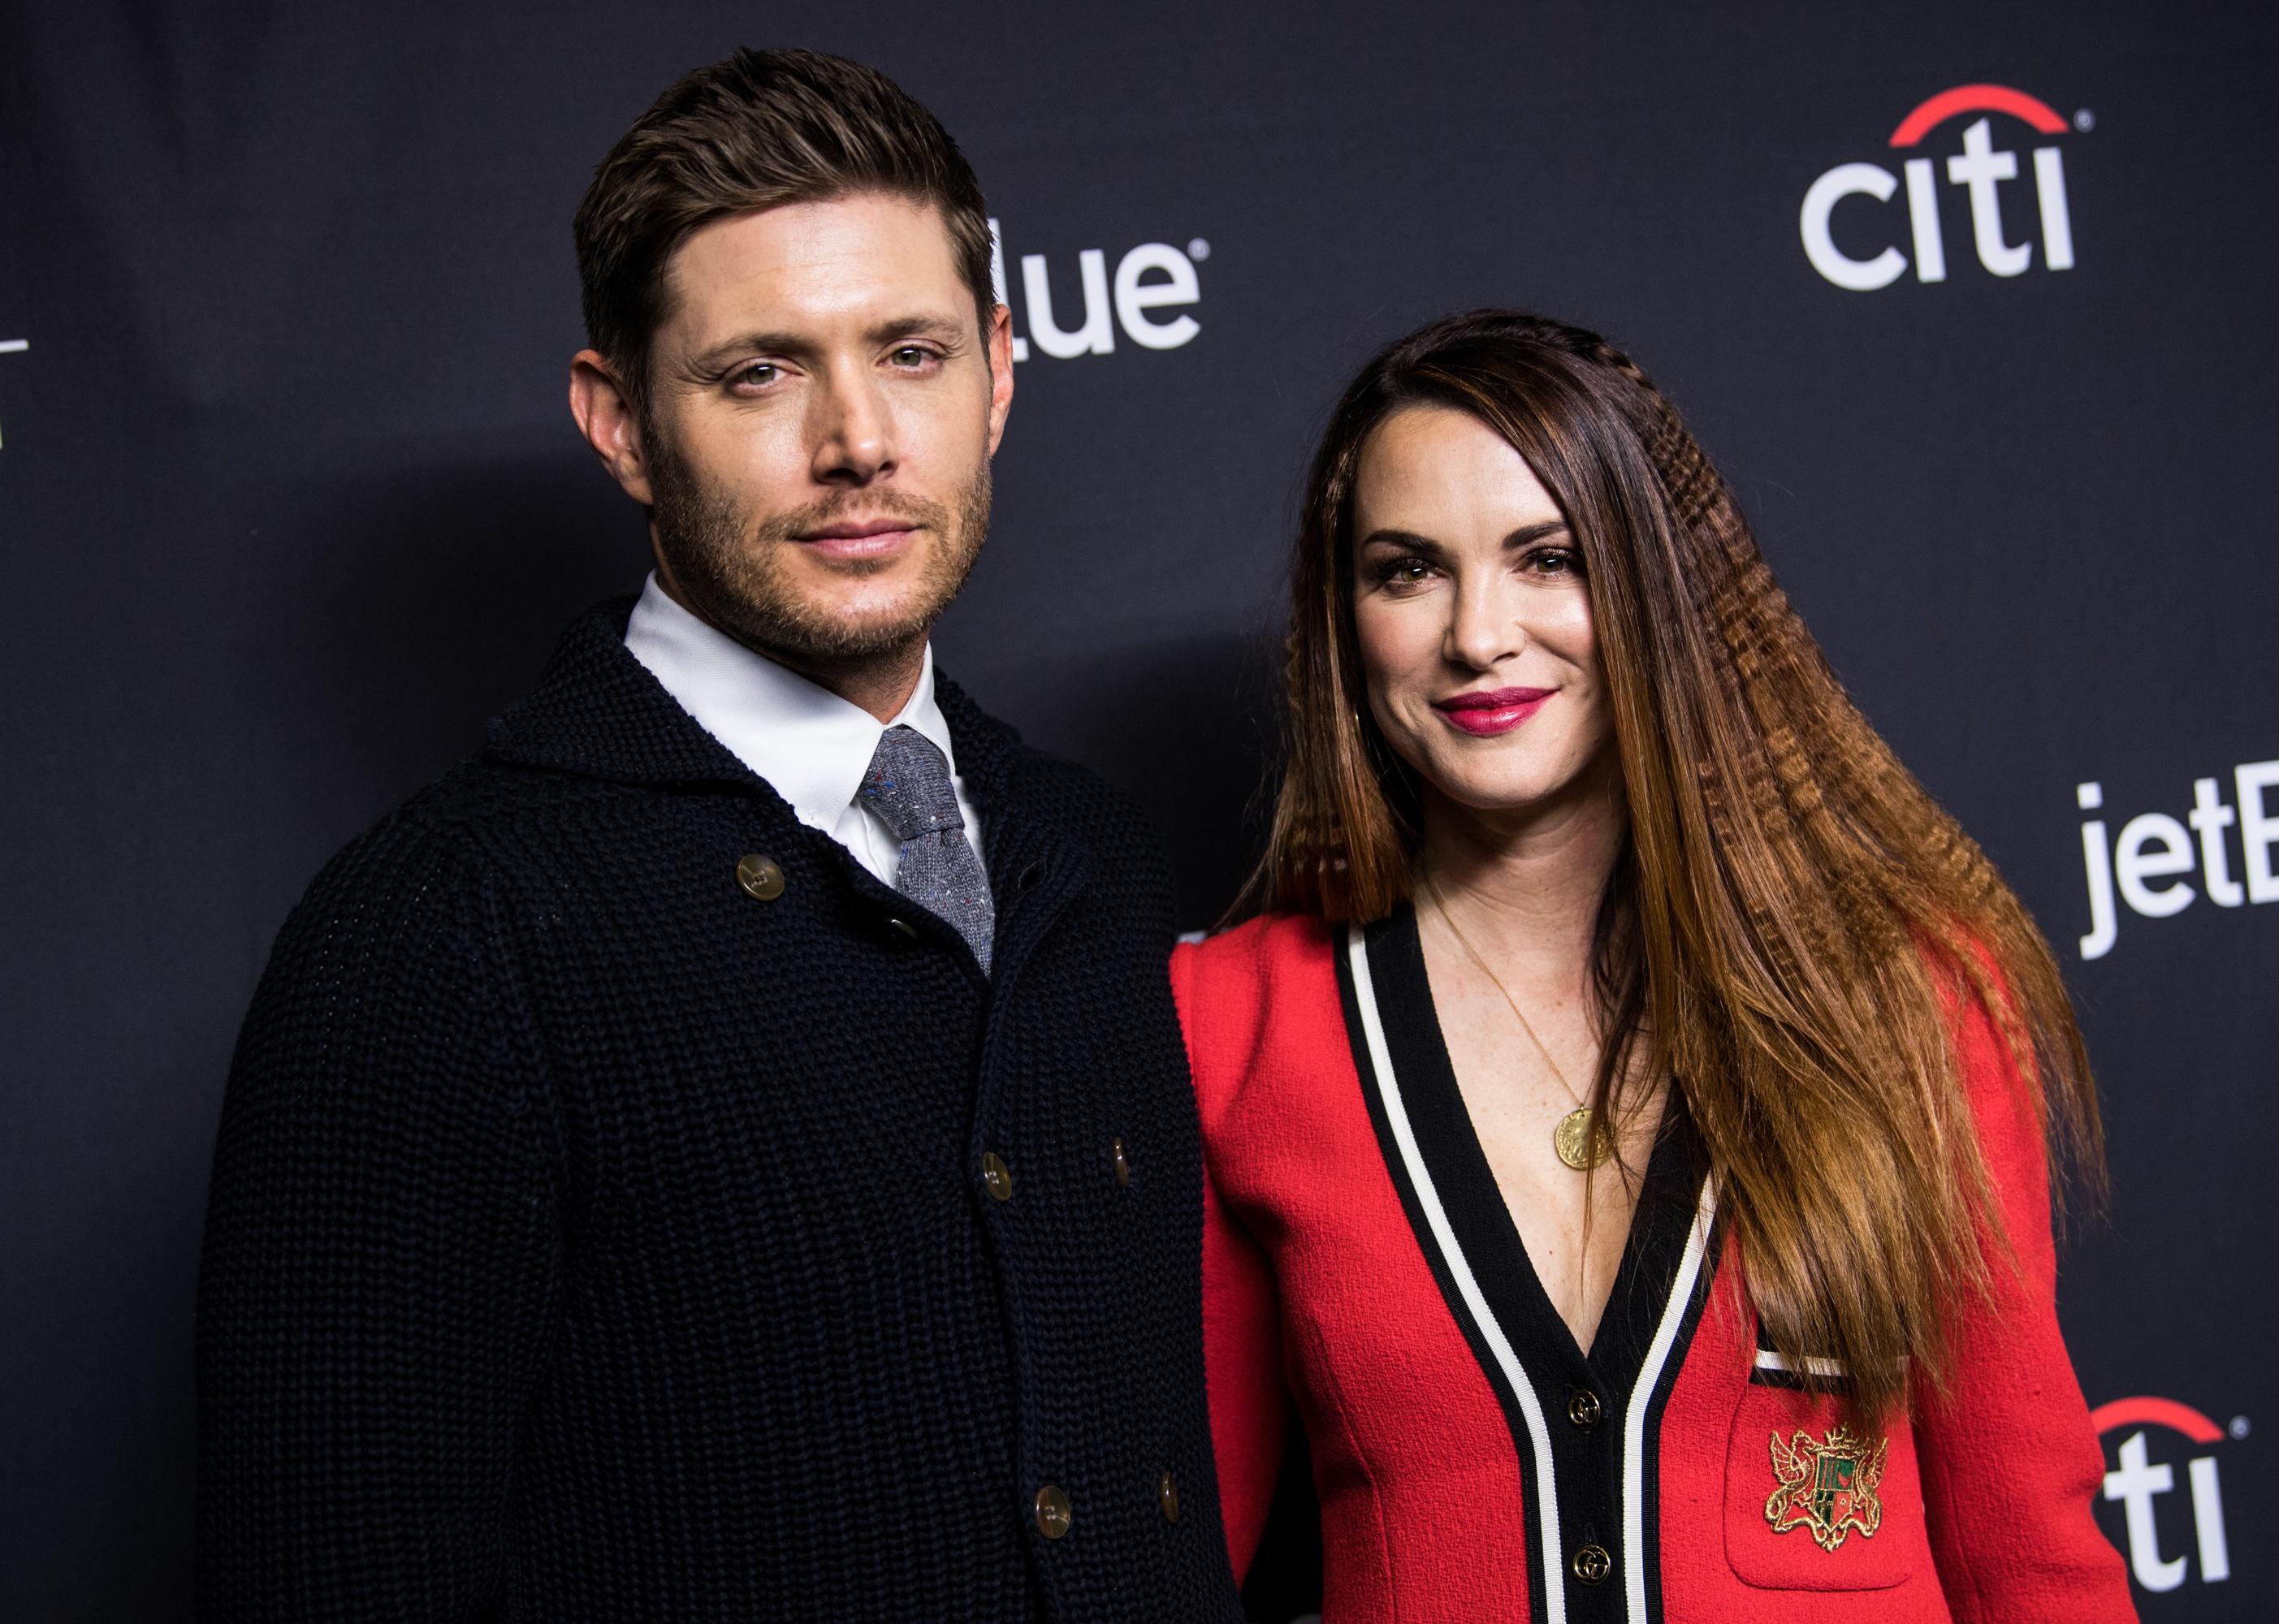 Jensen and Danneel Ackles posing on red carpet.